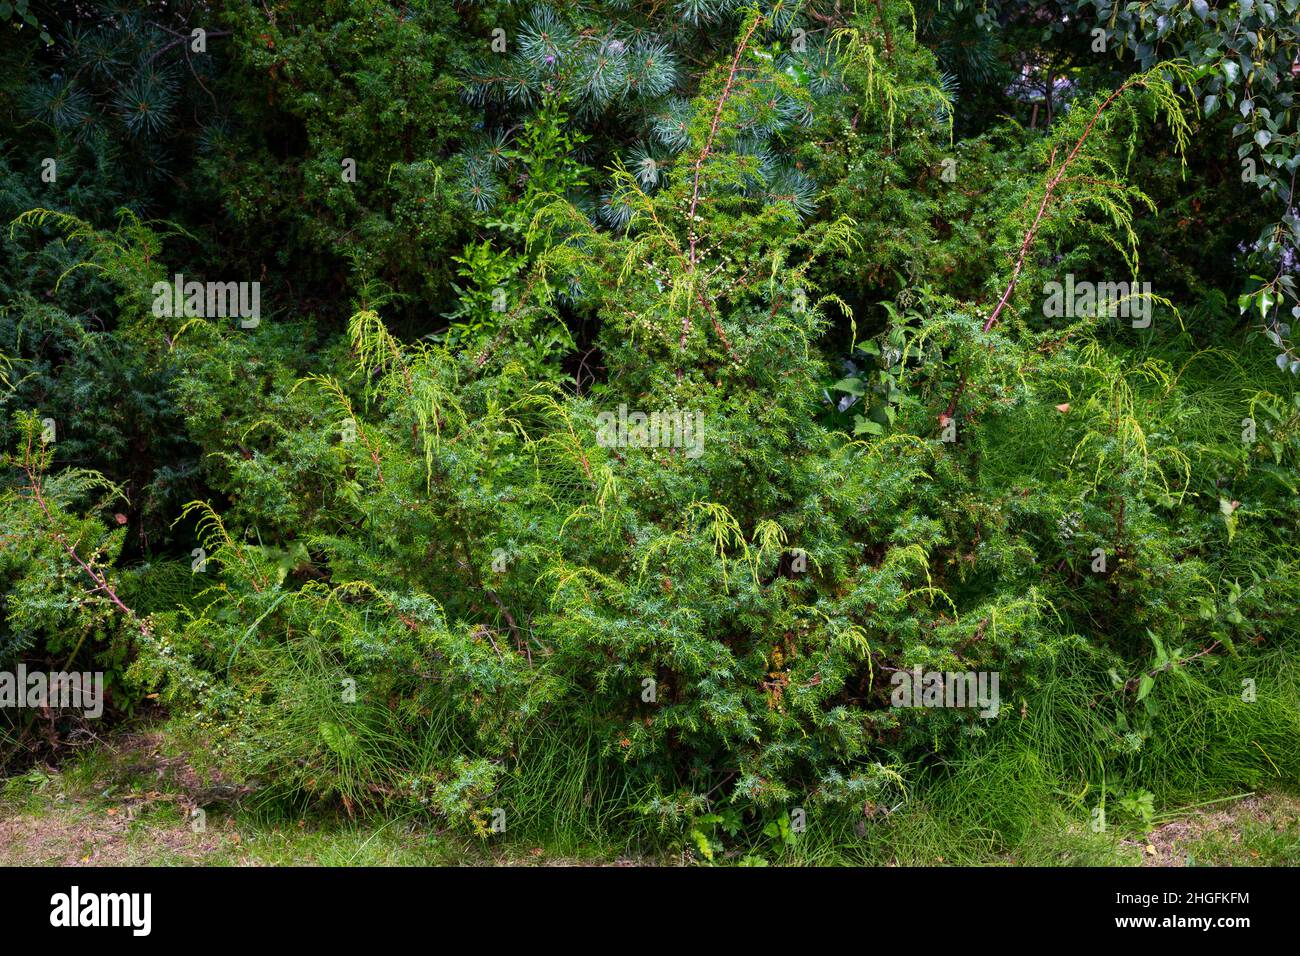 Juniperus communis amongst evergreen trees Stock Photo